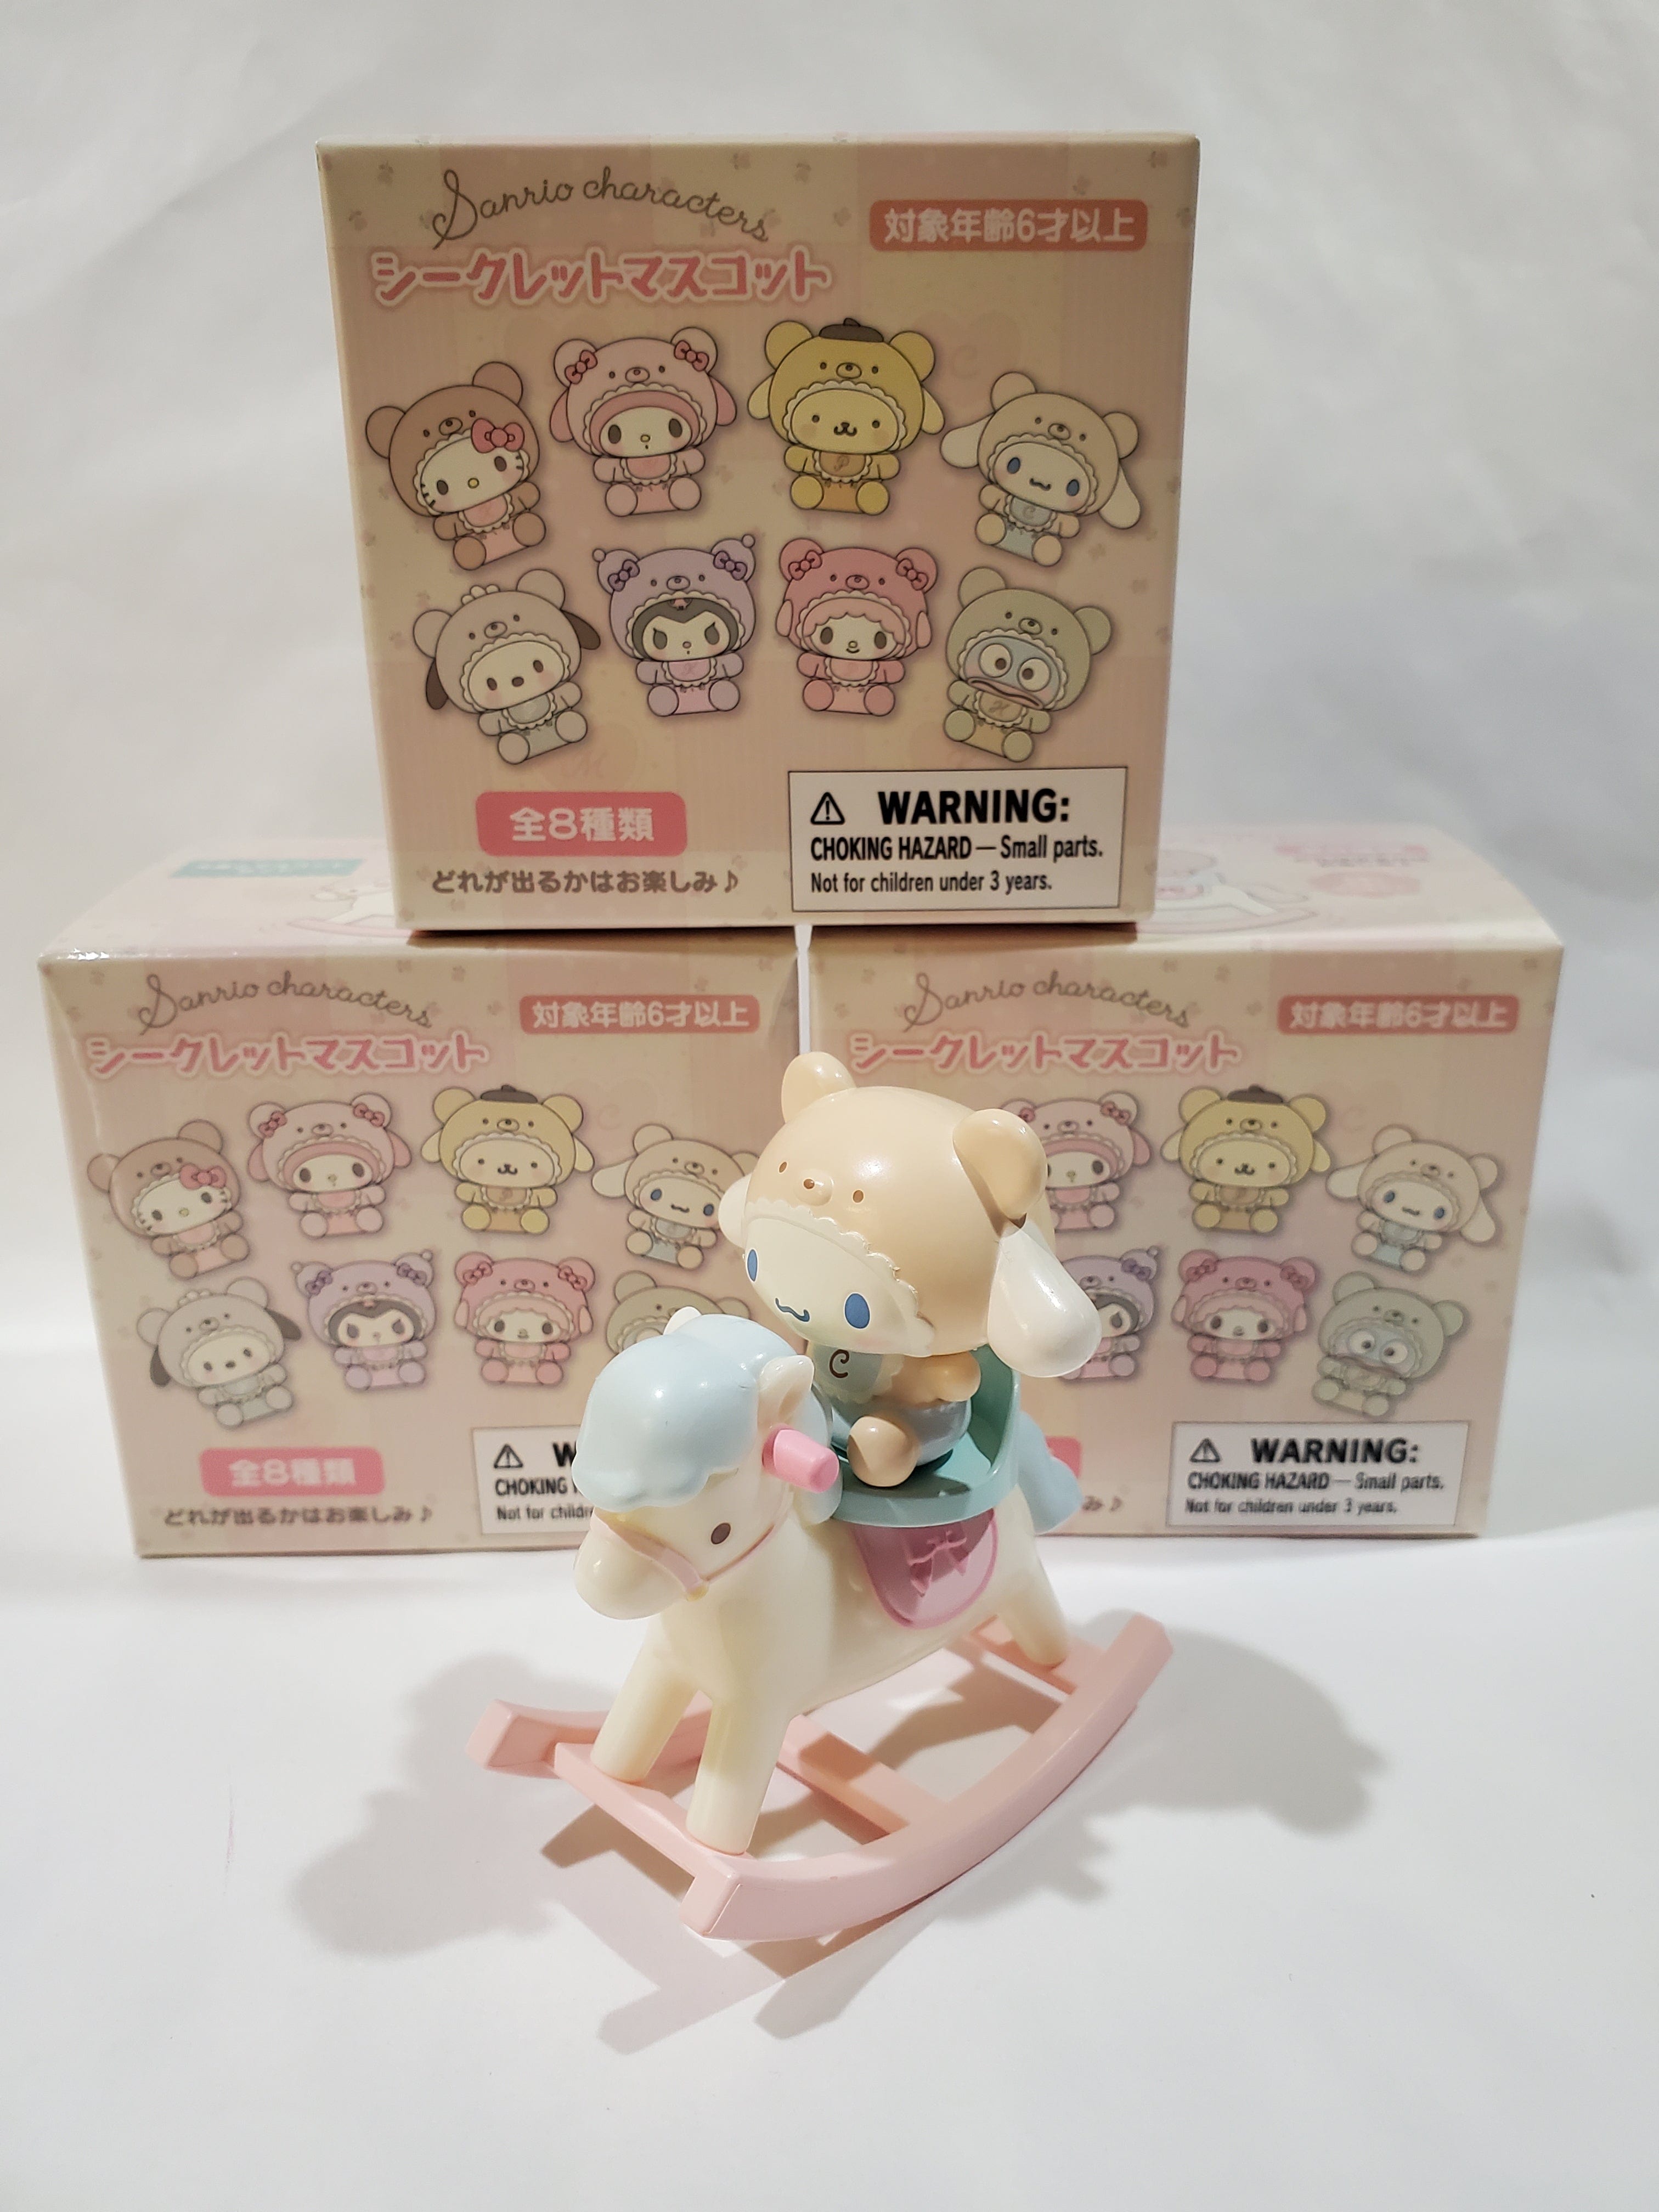 Enesco Sanrio Baby on a Rocking Horse Figure Surprise Box Kawaii Gifts 4550337619643